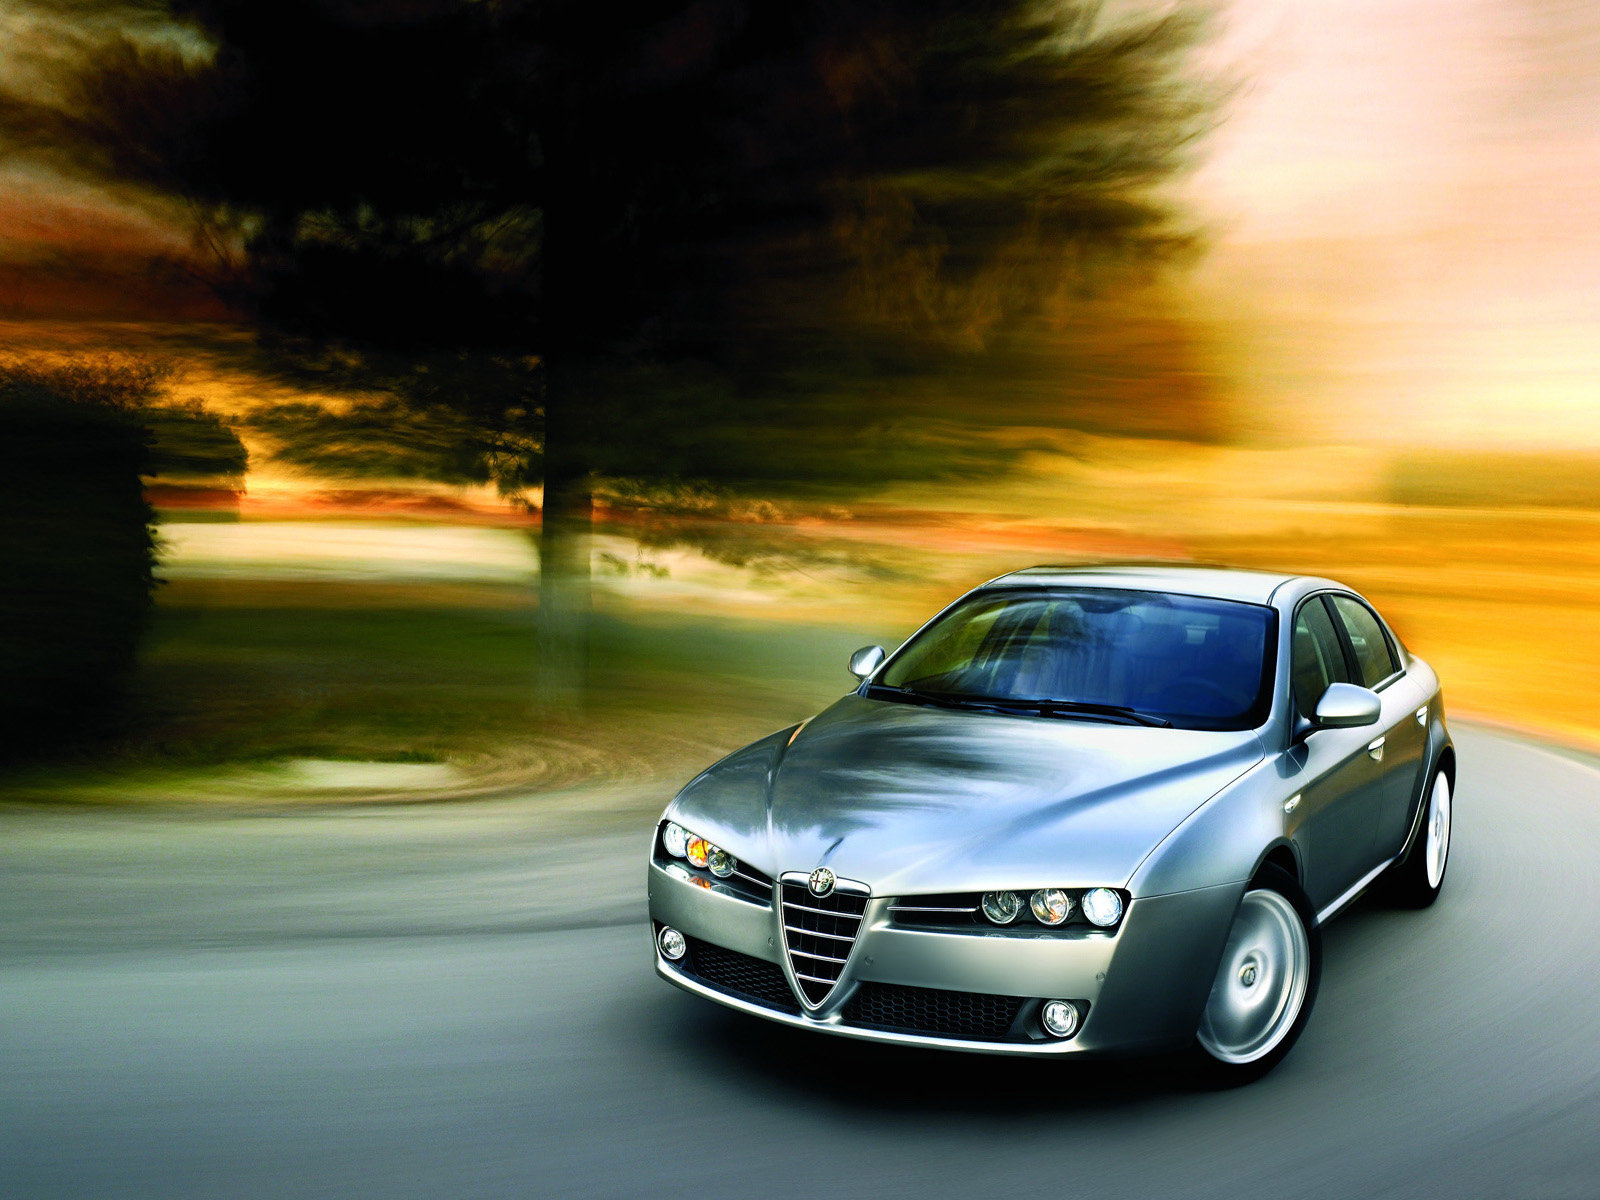 Best Alfa Romeo 159 wallpaper ID:282606 for High Resolution hd 1600x1200 desktop